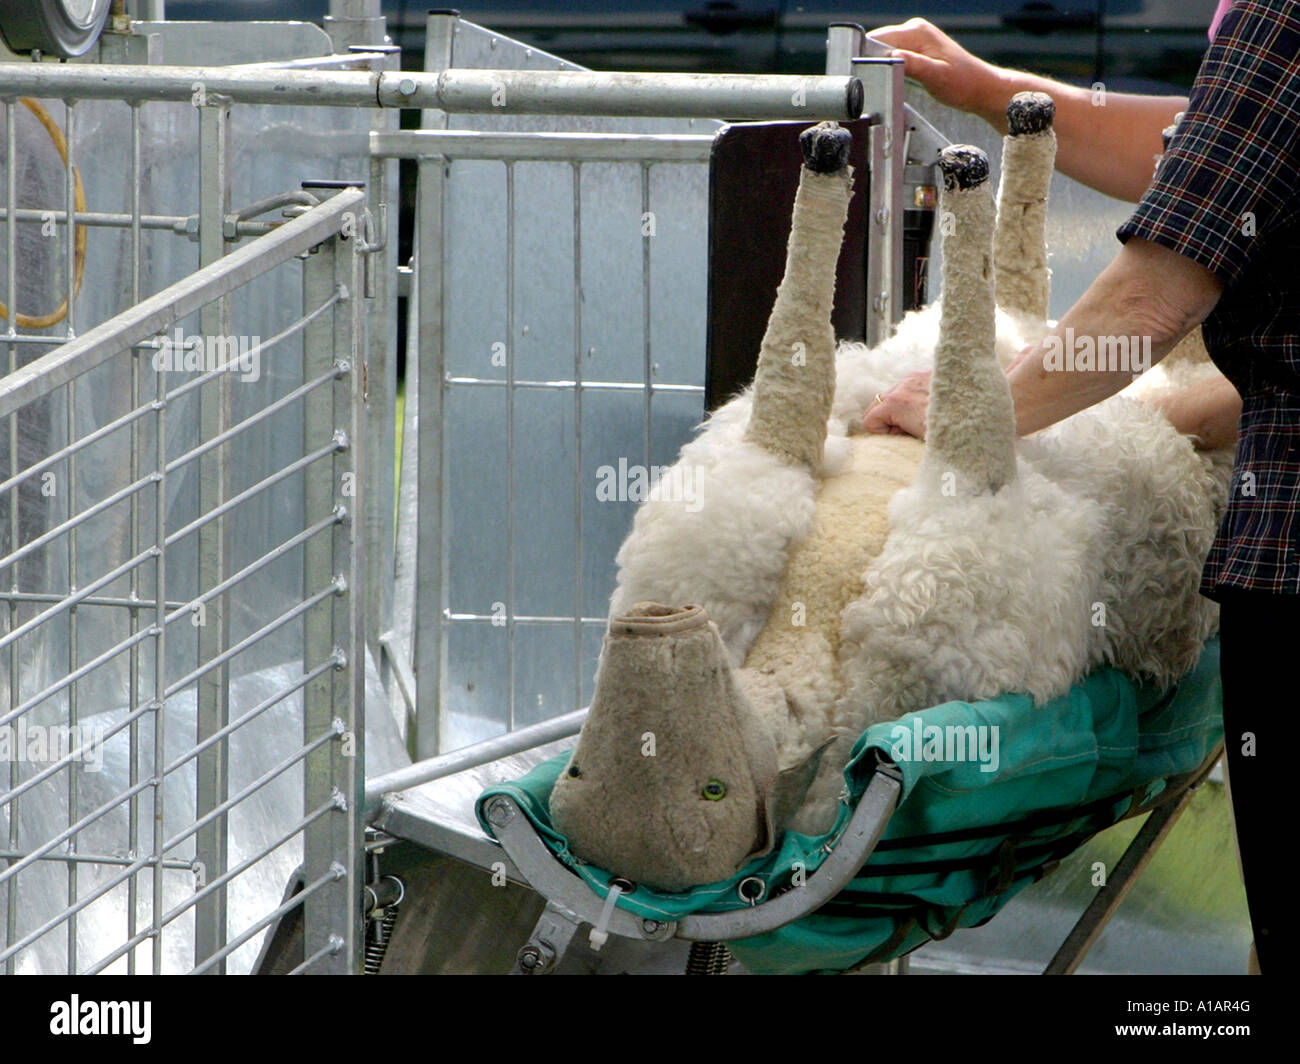 A fake sheep used to teach how to shear sheep. Stock Photo